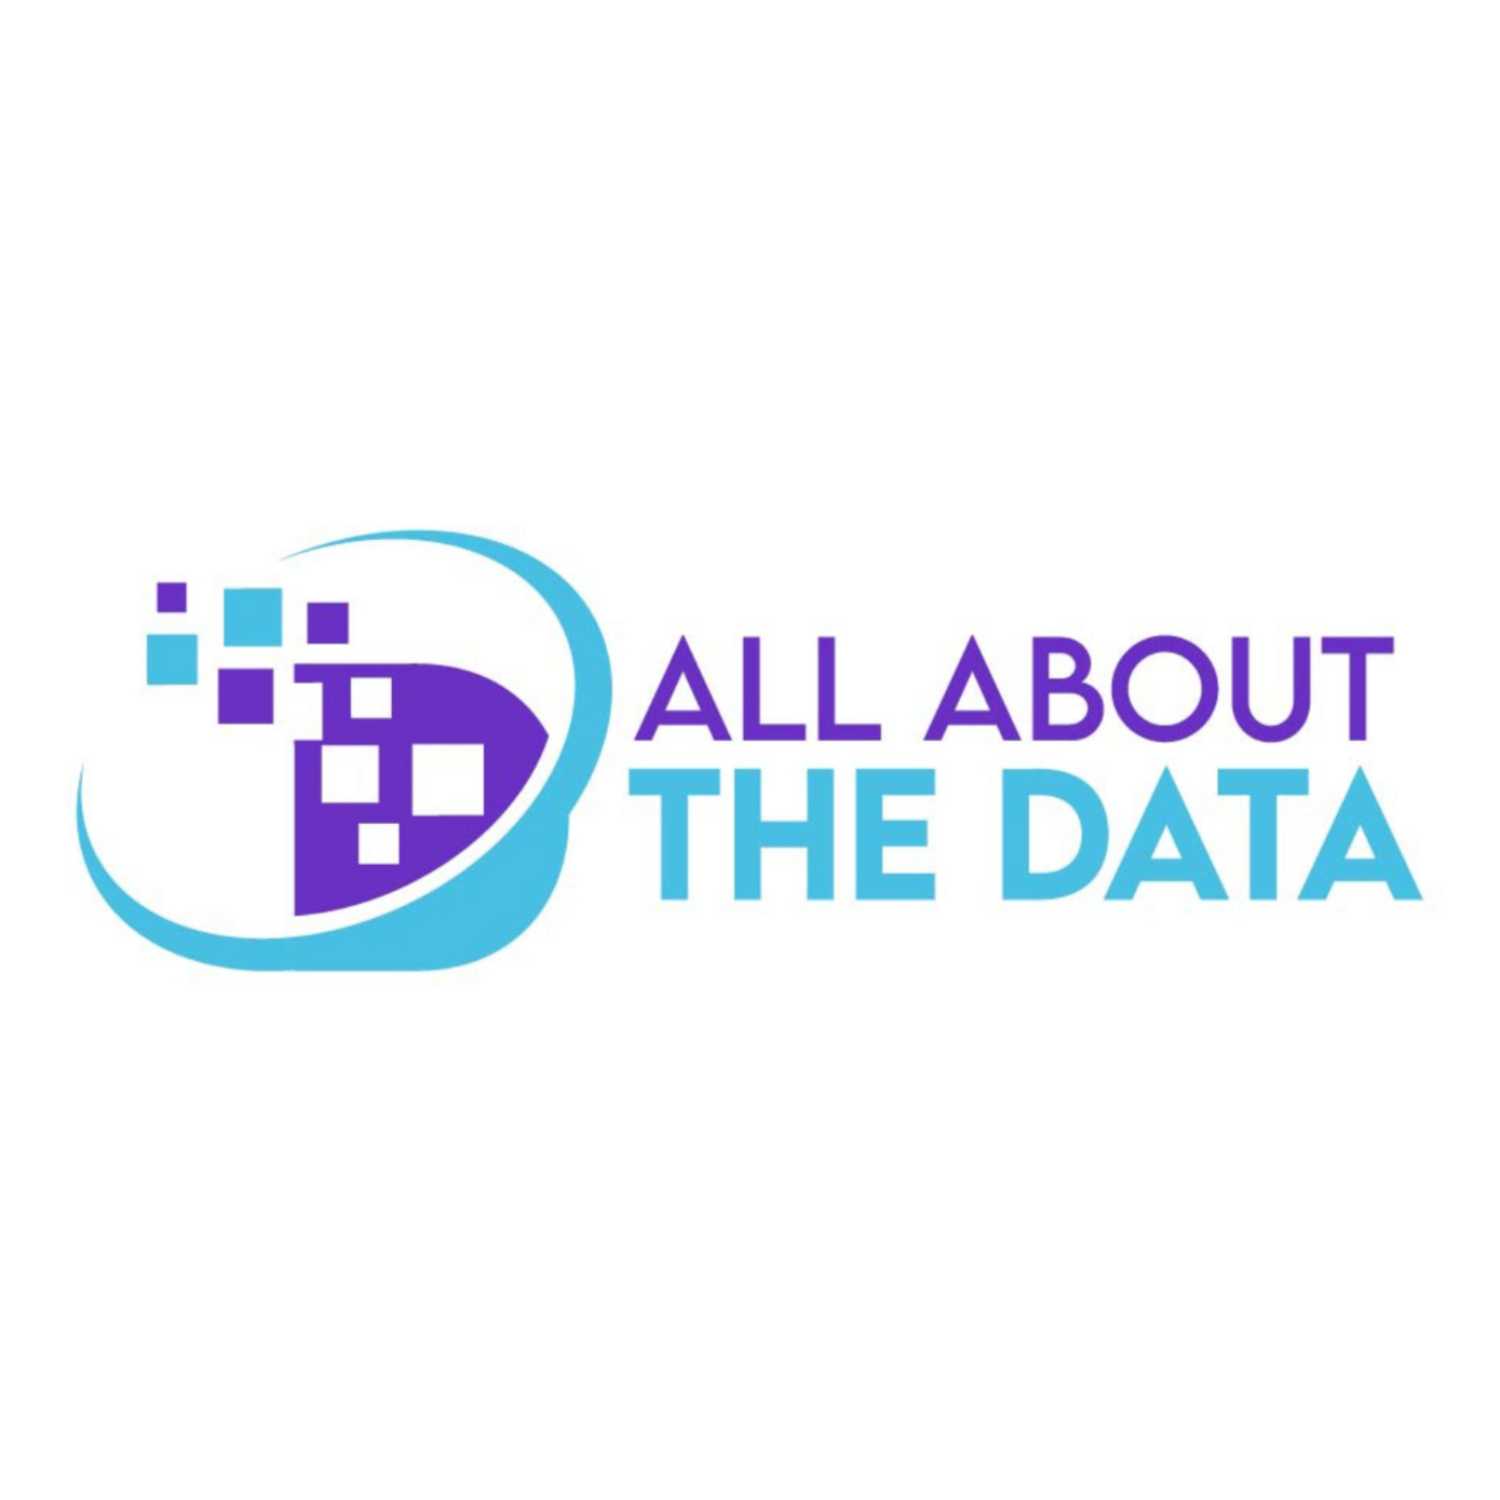 Episode 02 From Blackboards to Data boards" W/ Amazon Business Intelligence Engineer Juan Pablo